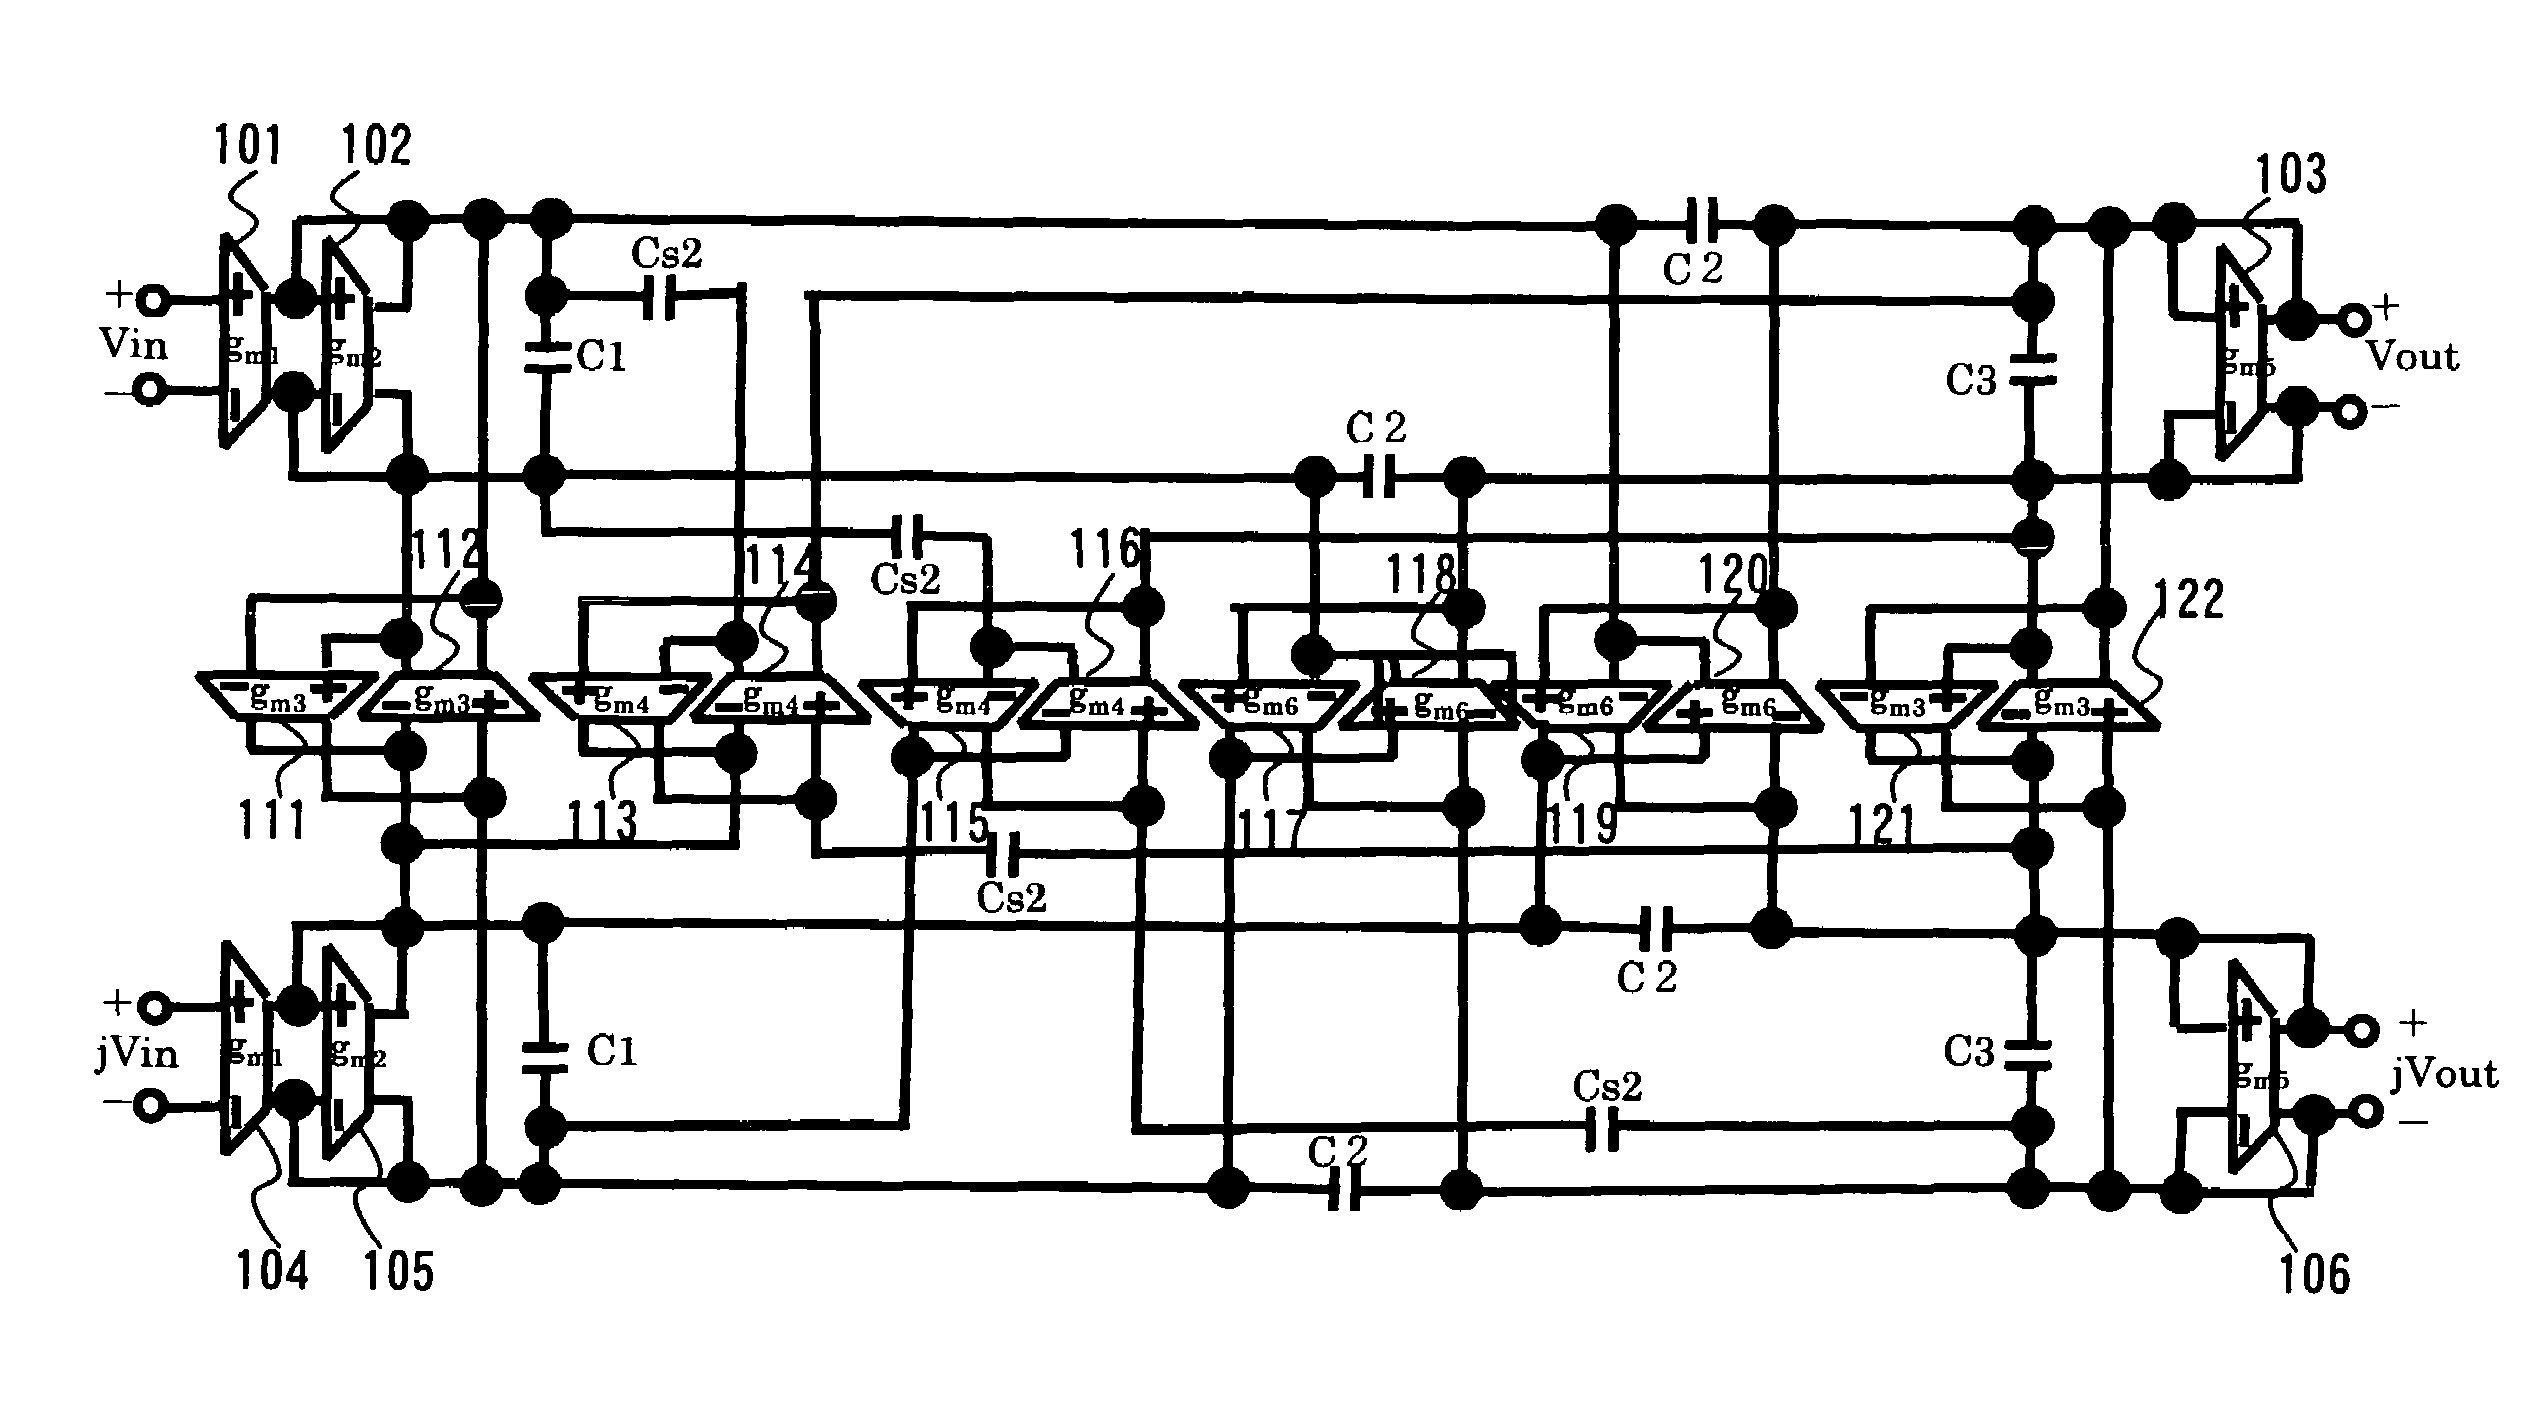 Complex filter circuit